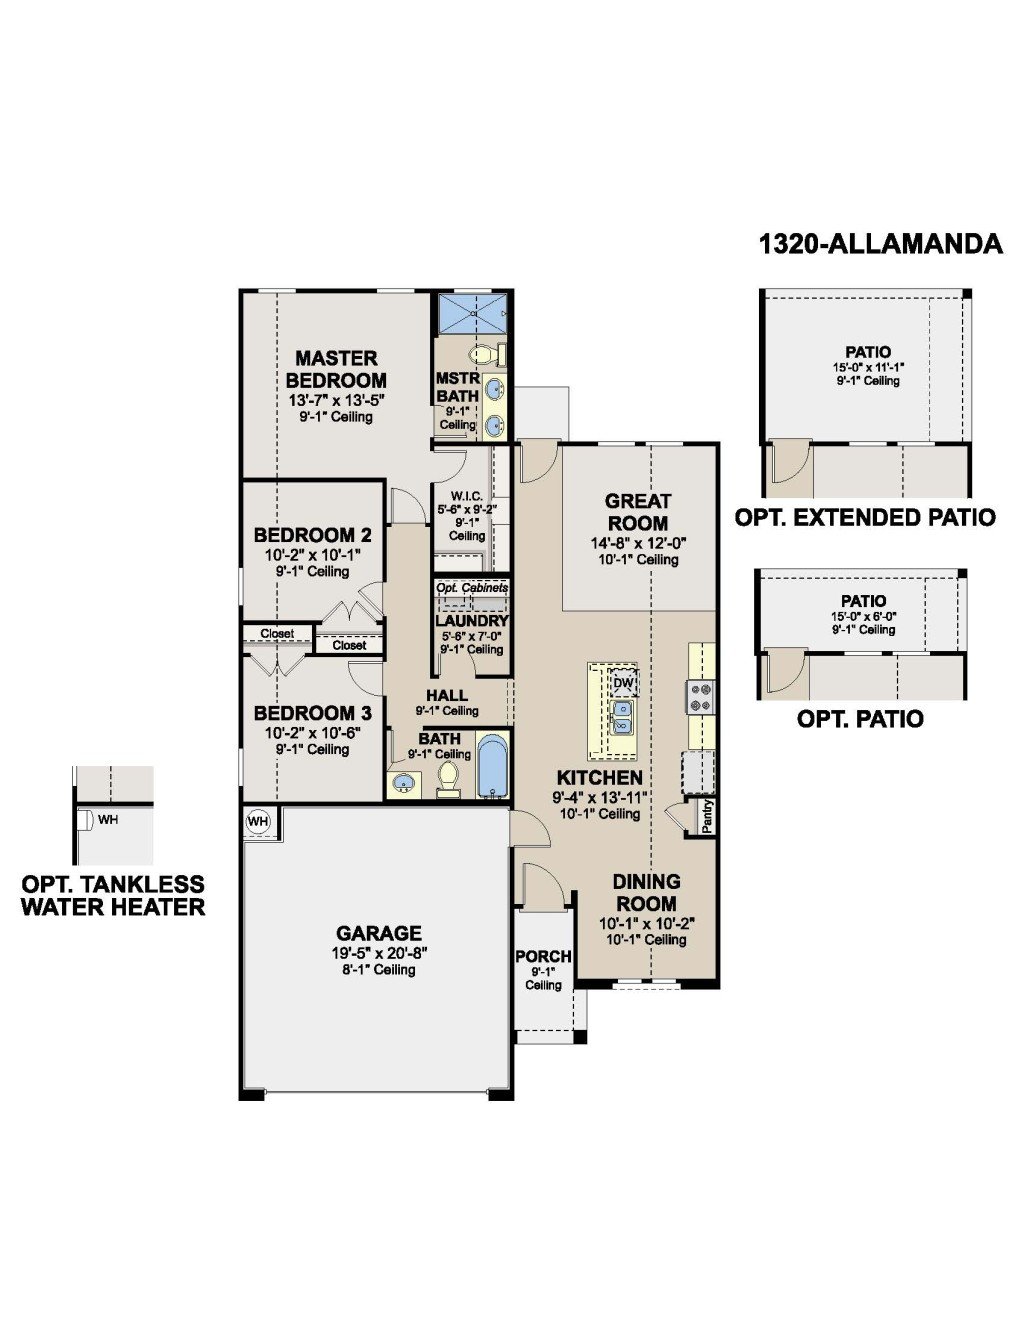 Allamanda 1320 Home Design Layout